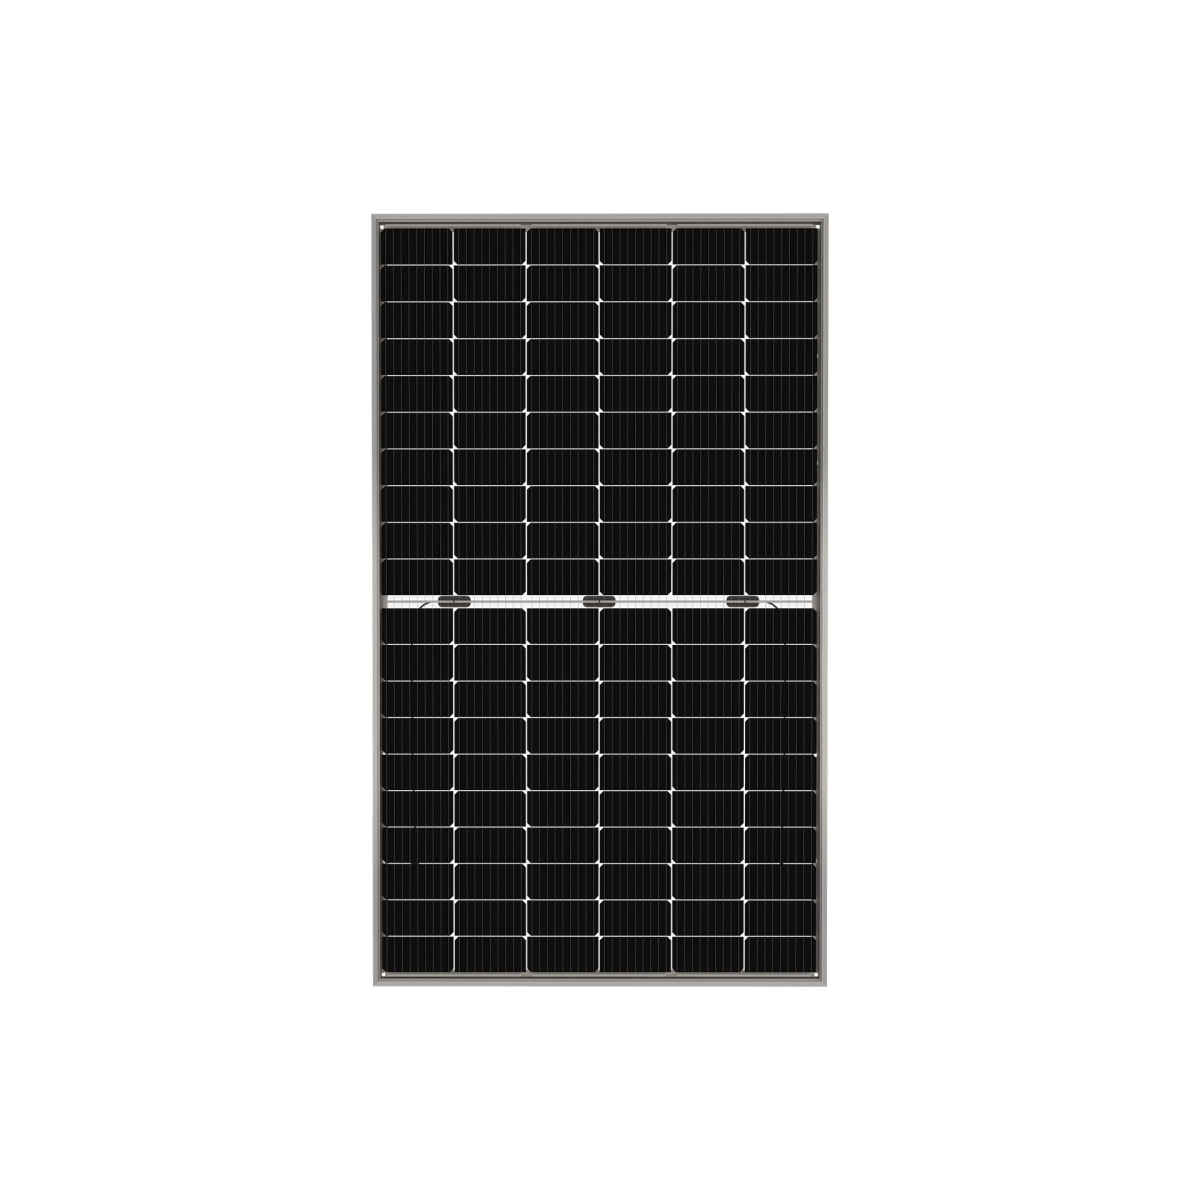 TommaTech 370 Watt 120 Percmono Bifacial Half-Cut Multi Busbar Solar Panel